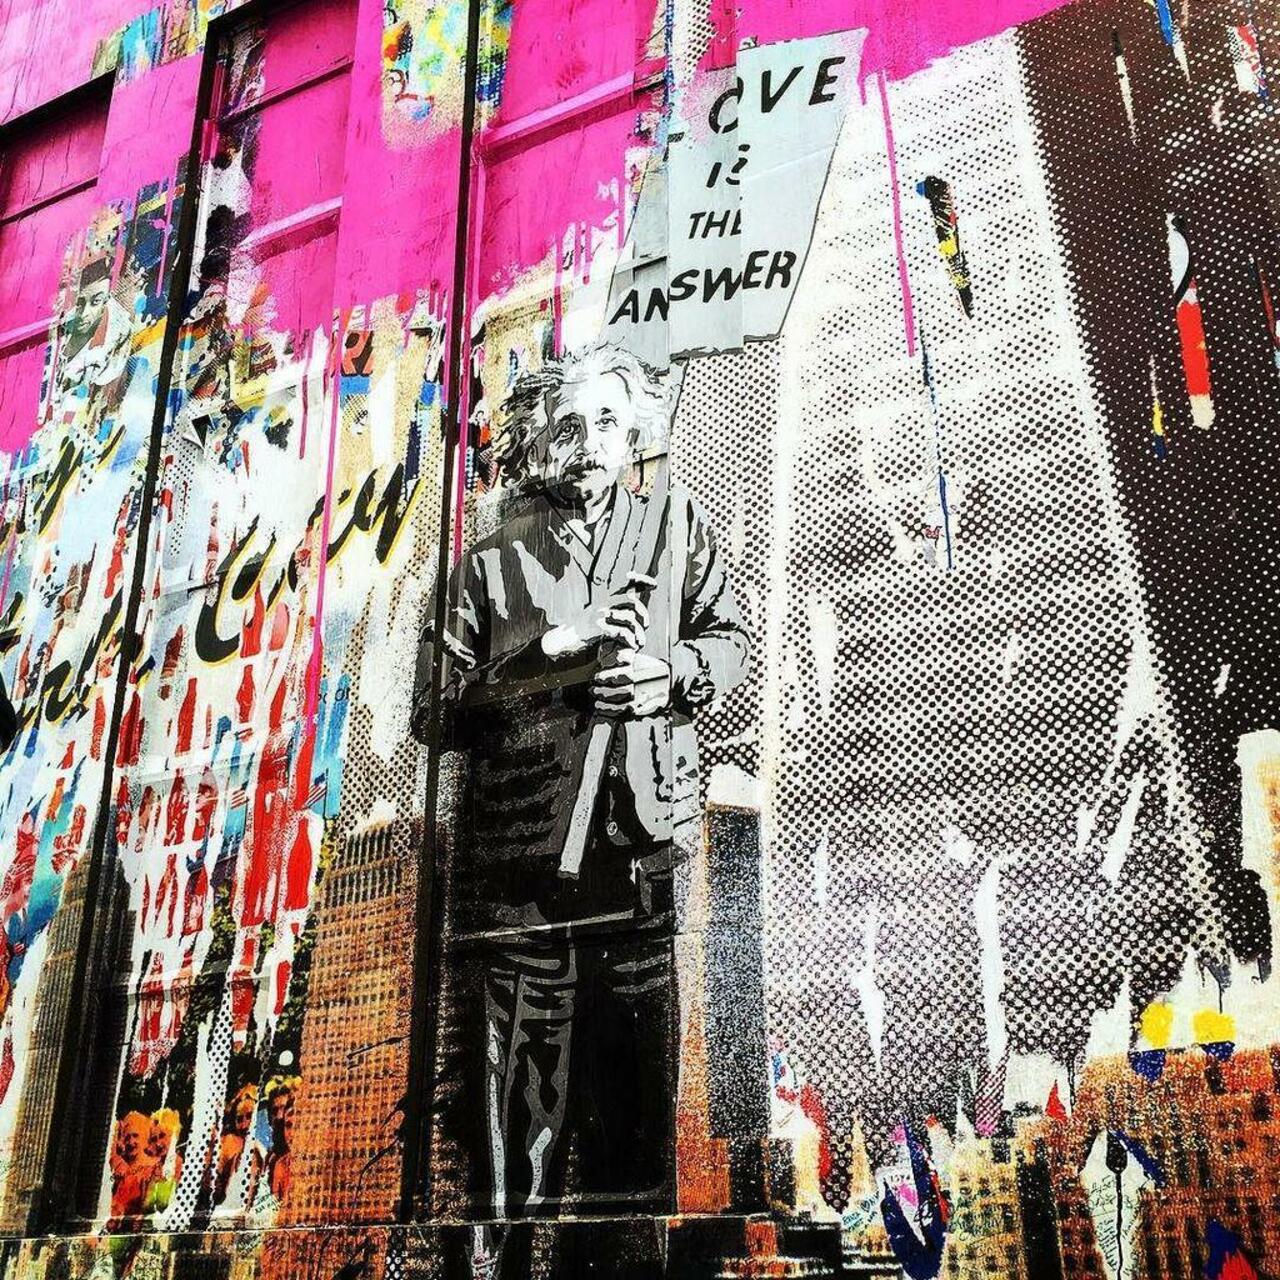 #love is the answer #graffiti in #manhatten #newyork #streetart #street #streetphotography… http://ift.tt/1NgnOKS http://t.co/ltTCc3ZvZ5